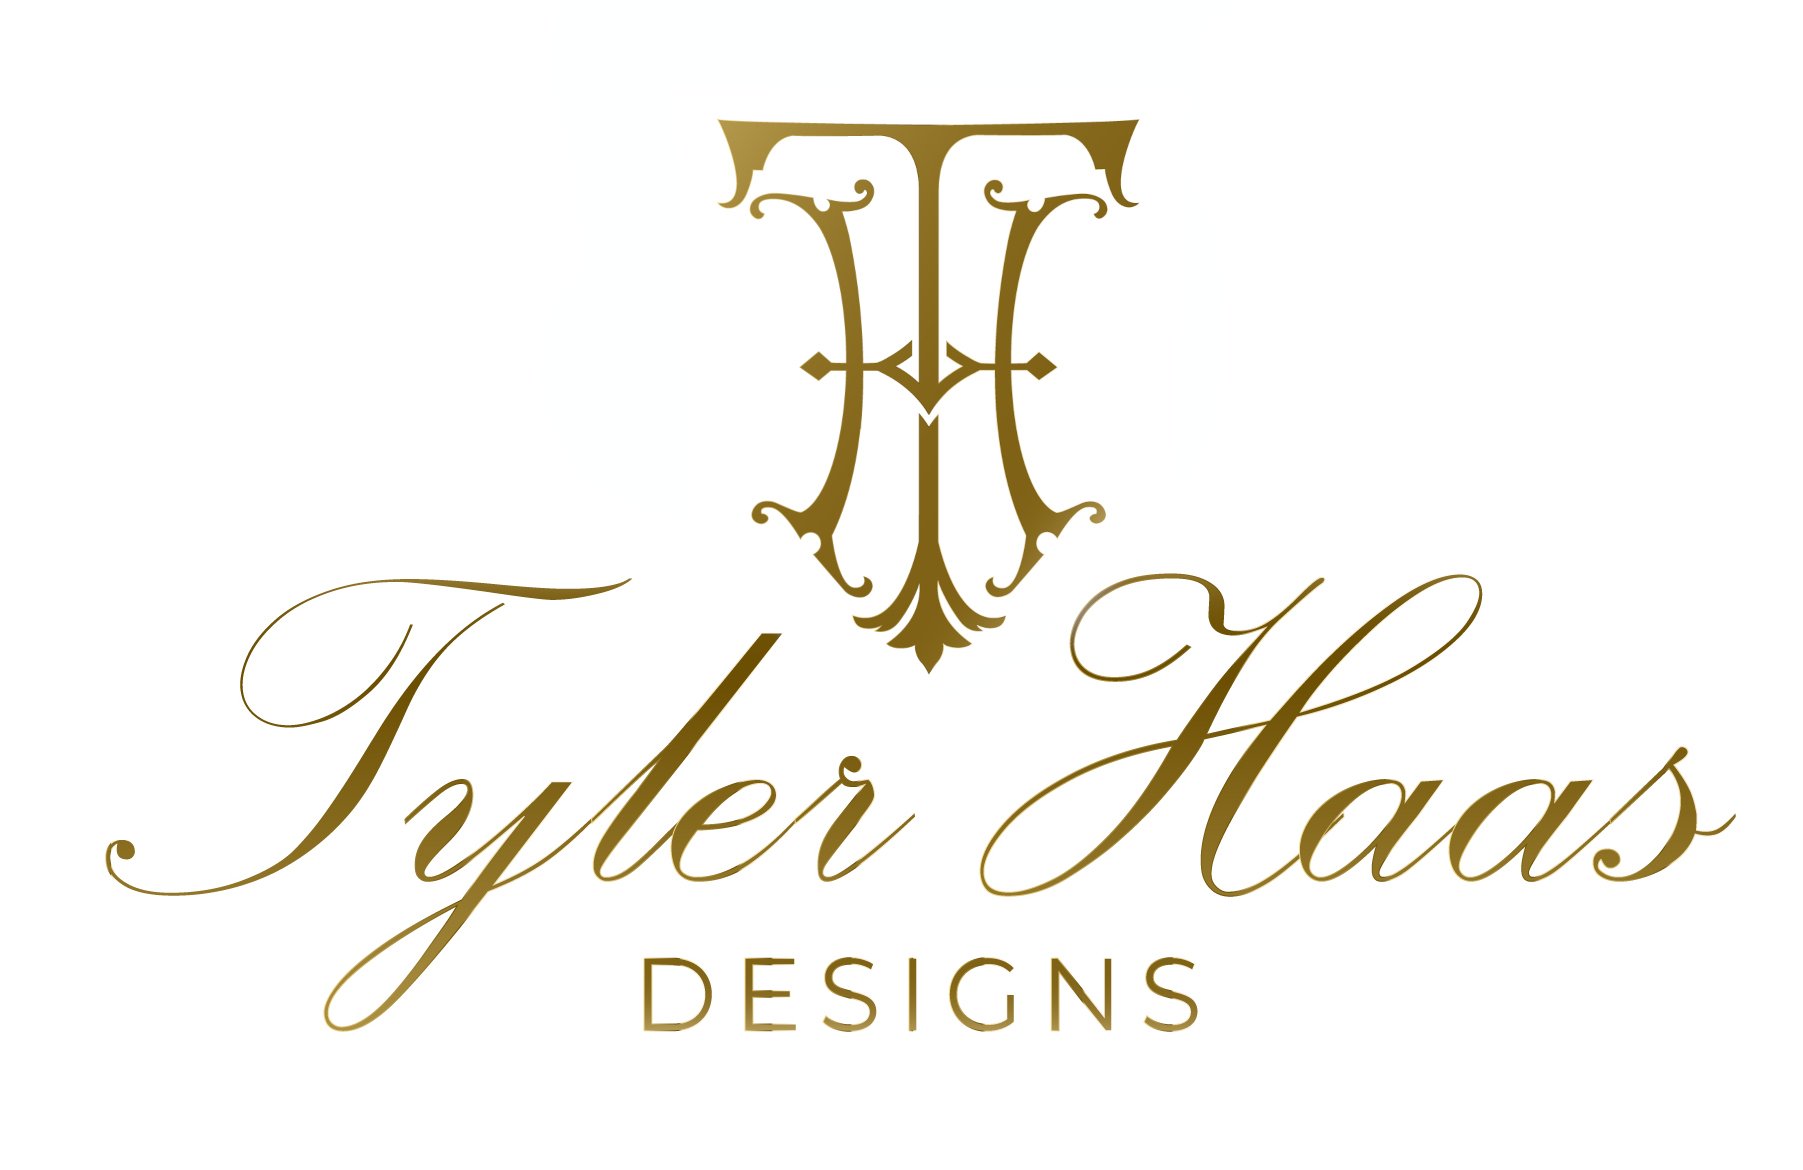 Tyler Haas Designs